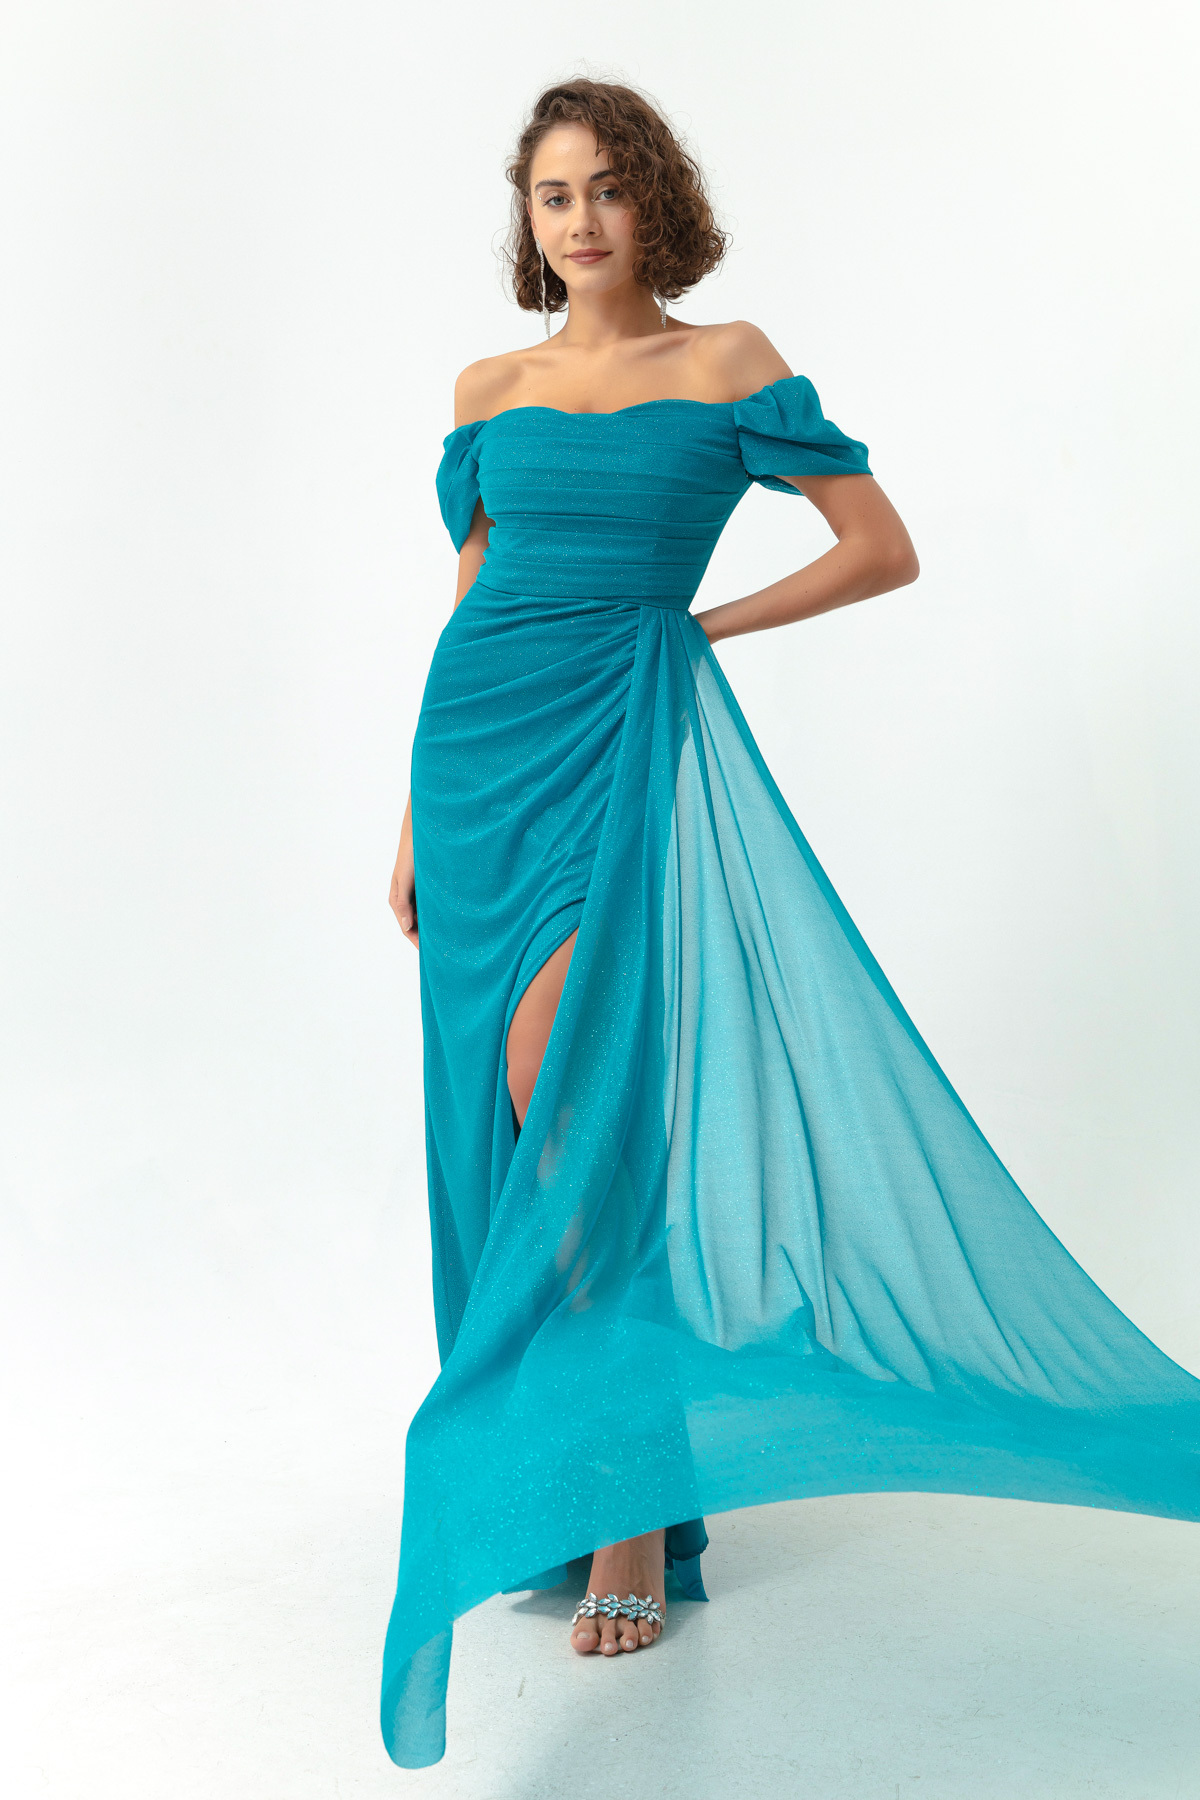 Lafaba Women's Blue Boat Collar Draped Long Glittery Evening Dress with a Slit.